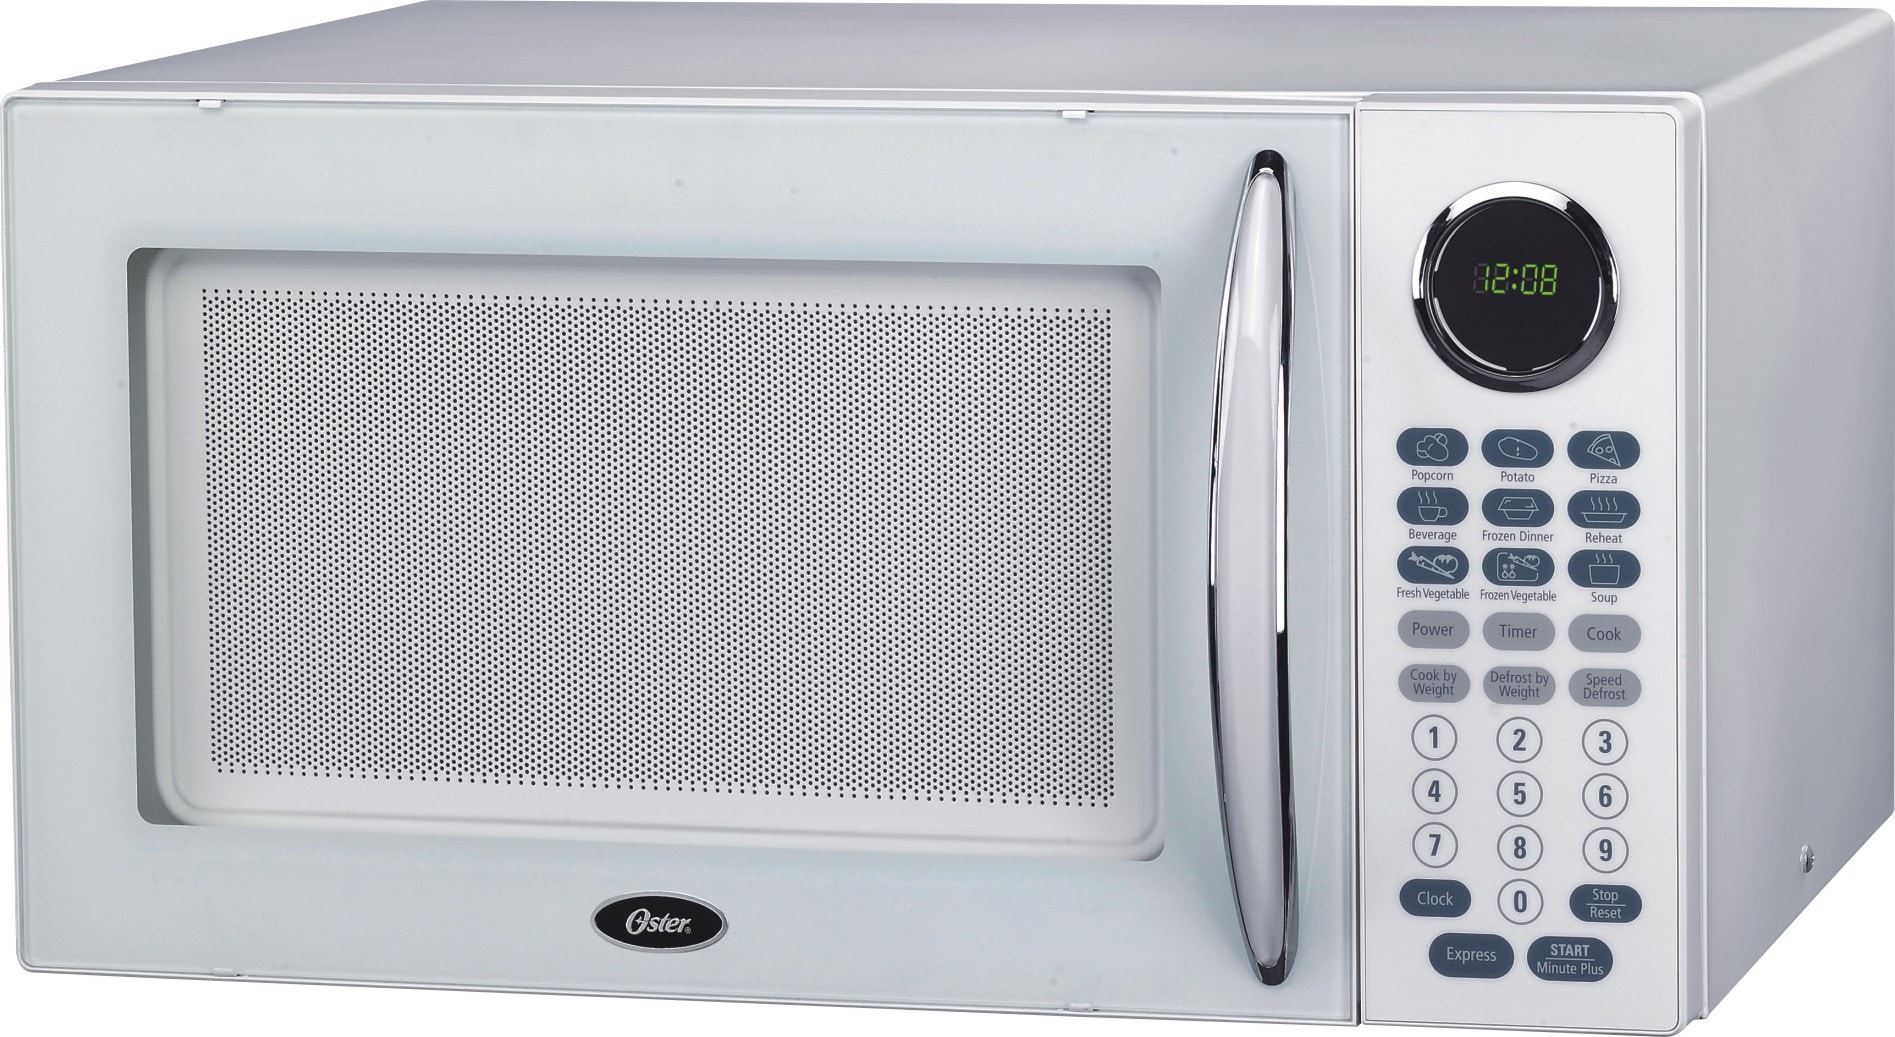 Proctor Silex 1.1 cu ft 1000 Watt Microwave Oven - Stainless Steel